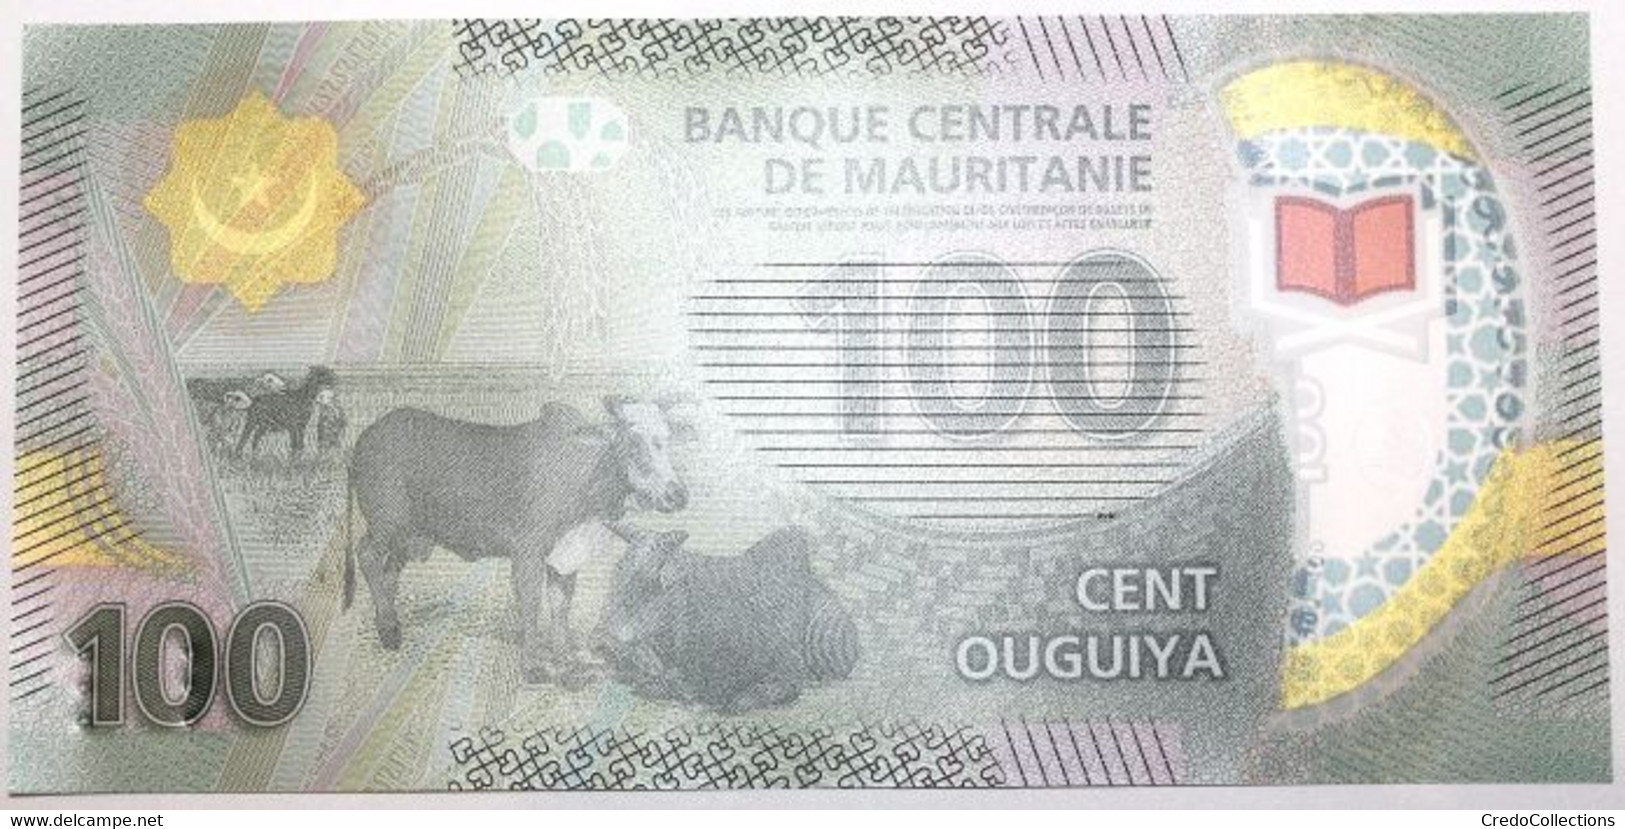 Mauritanie - 100 Ouguiya - 2017 - PICK 23a - NEUF - Mauritanie